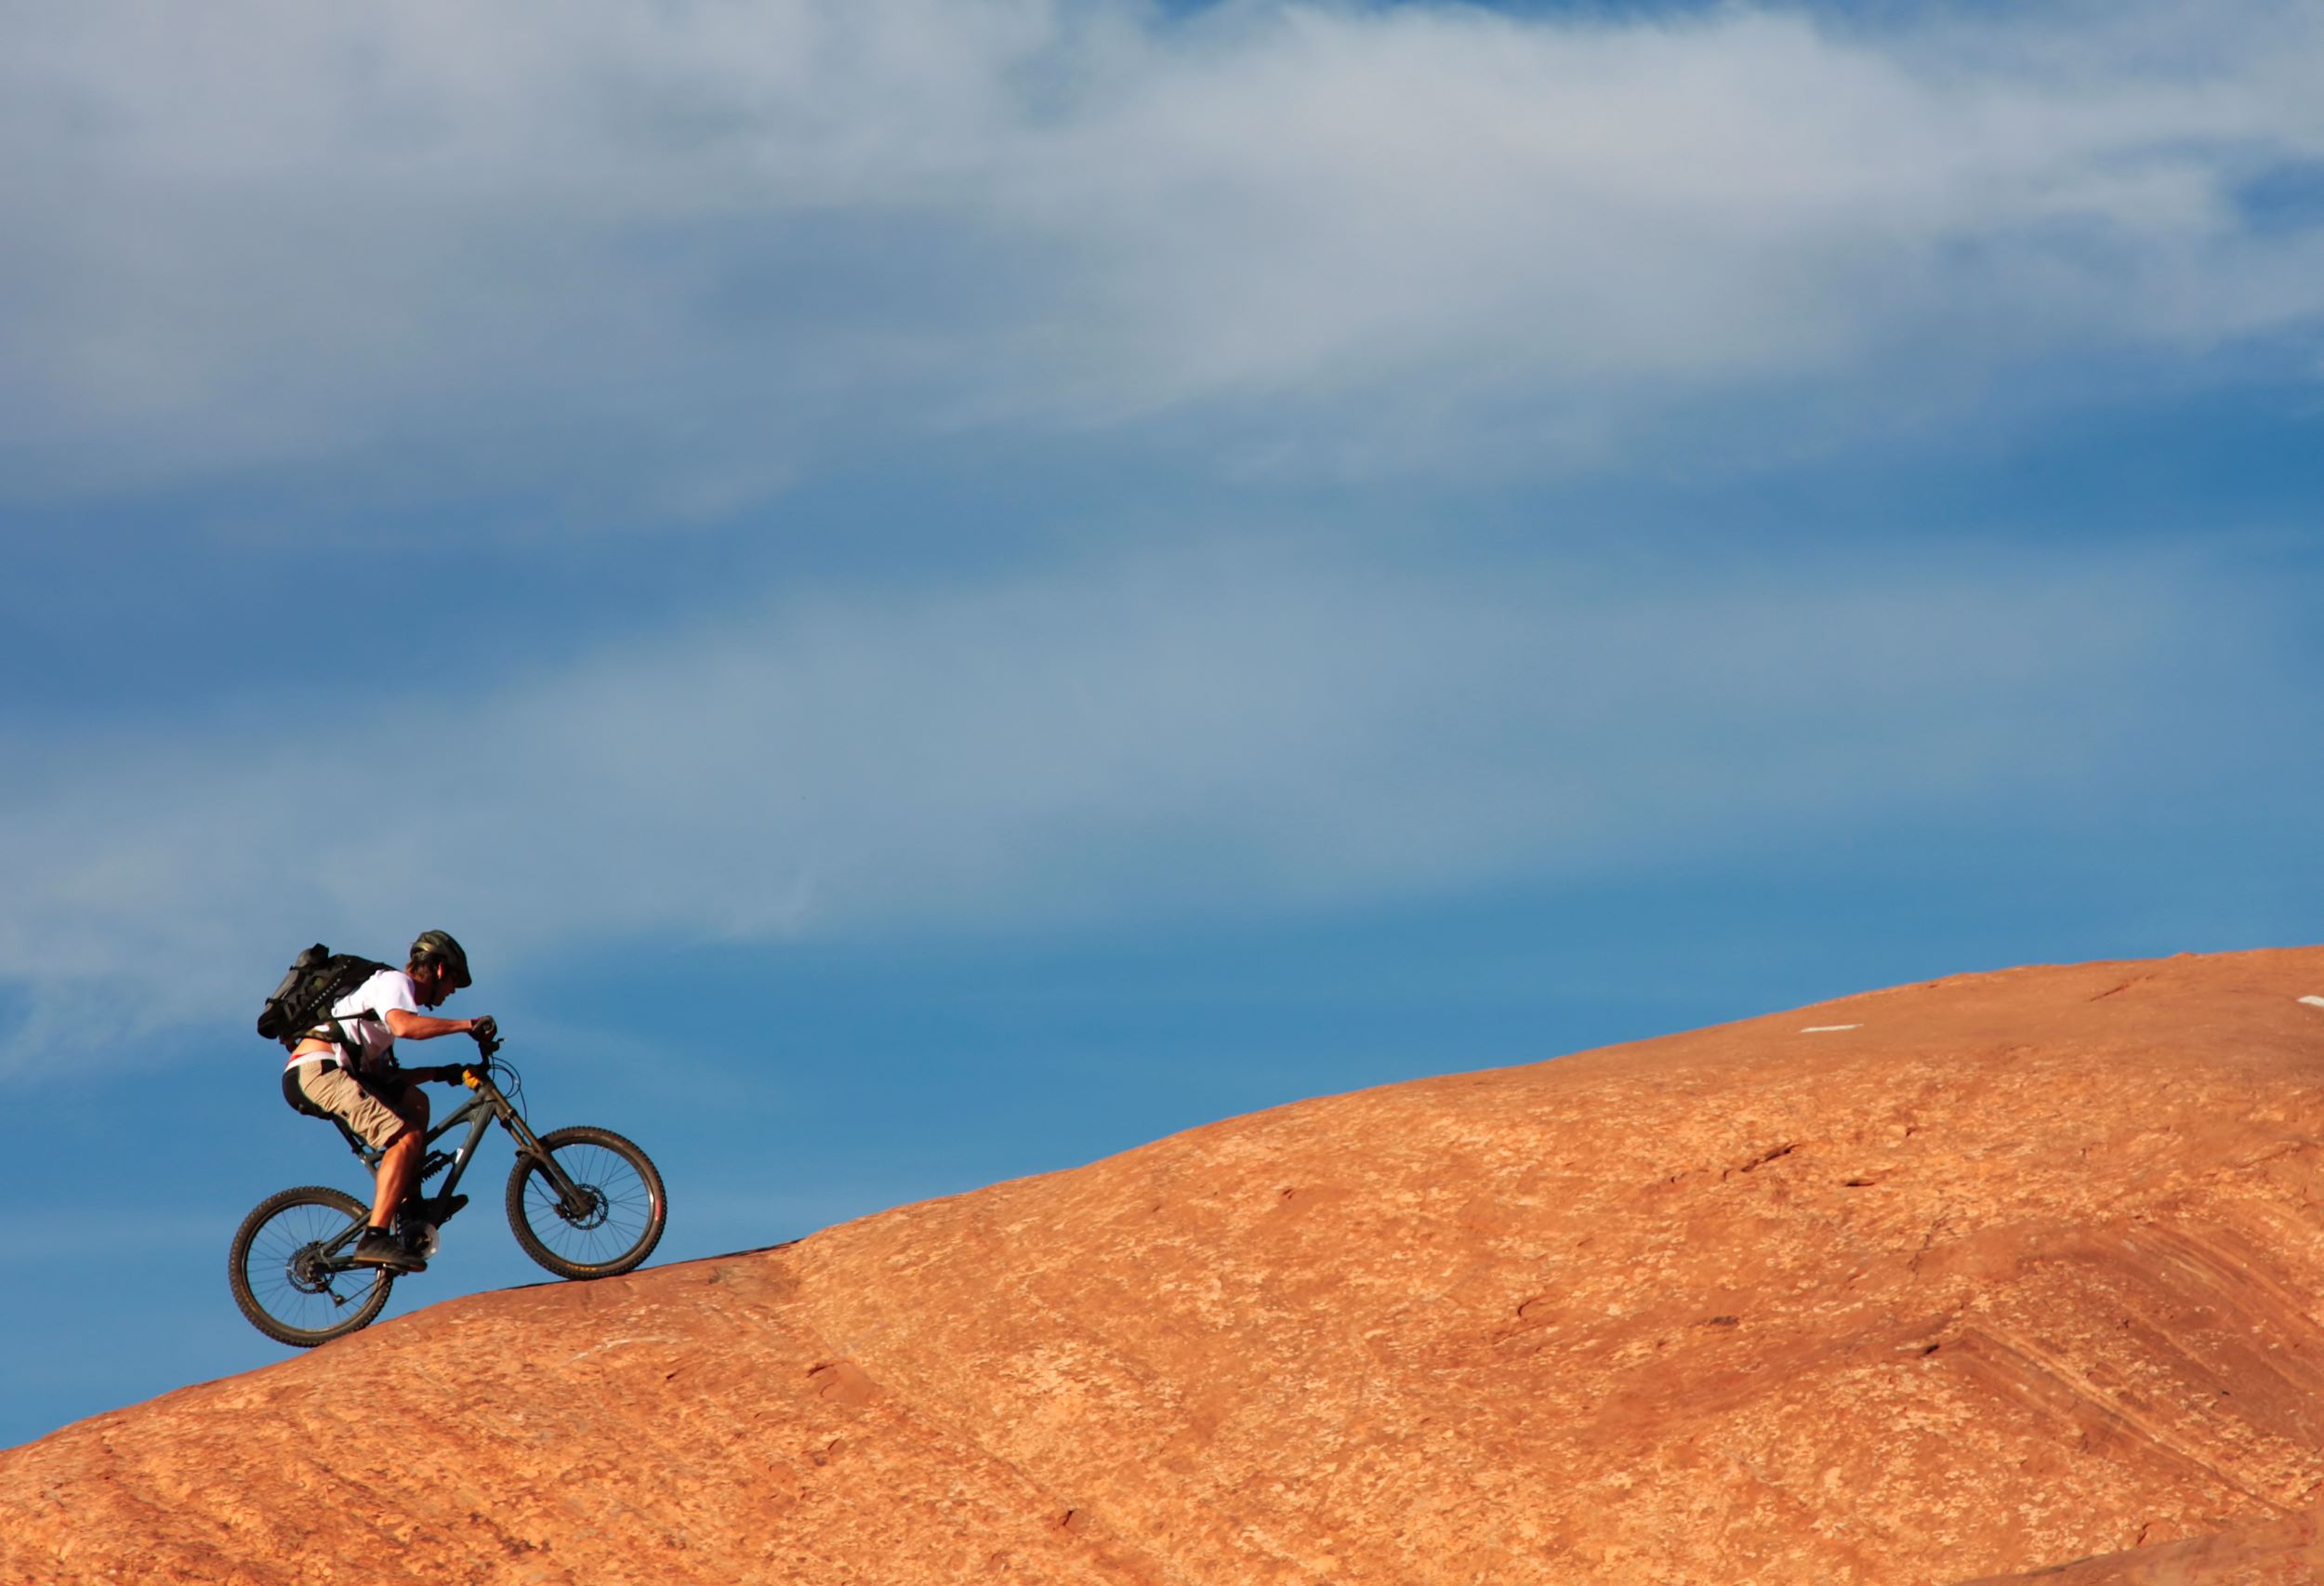 A cycling across Utah's red rocks.